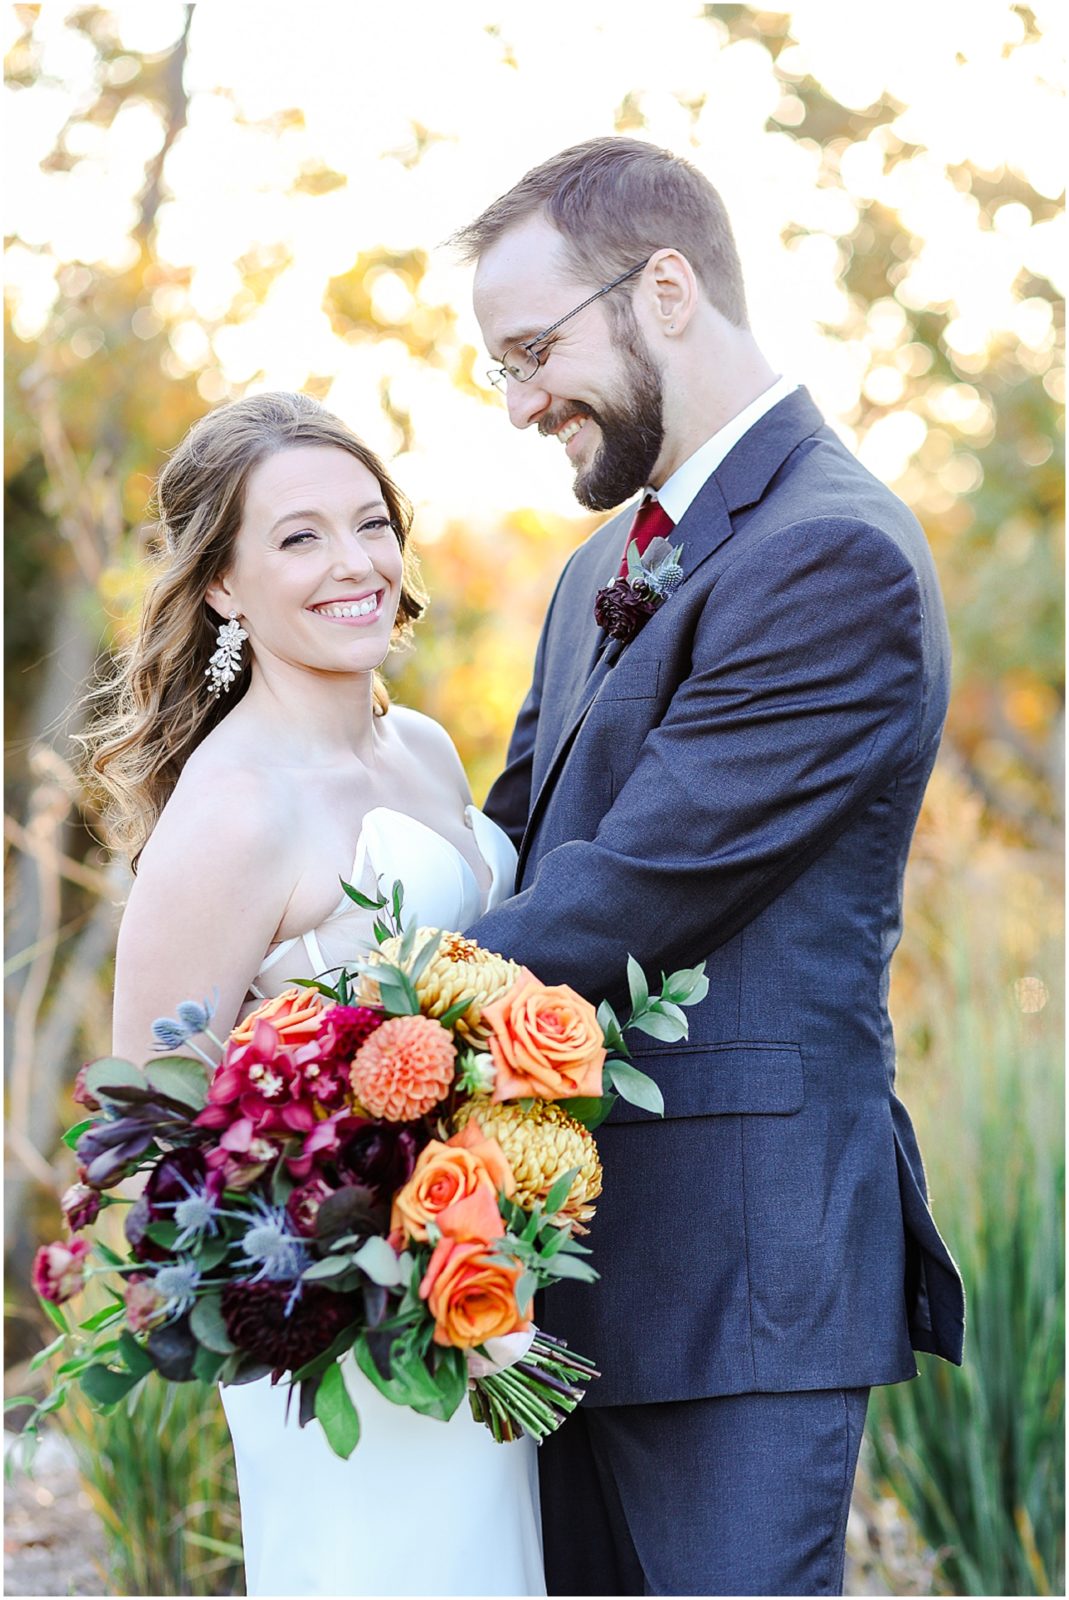 Stunning Fall Wedding Flowers | Wedding Theme for Fall | Fall Wedding Flowers | Mariam Saifan Photography | Kansas City Wedding Photographer